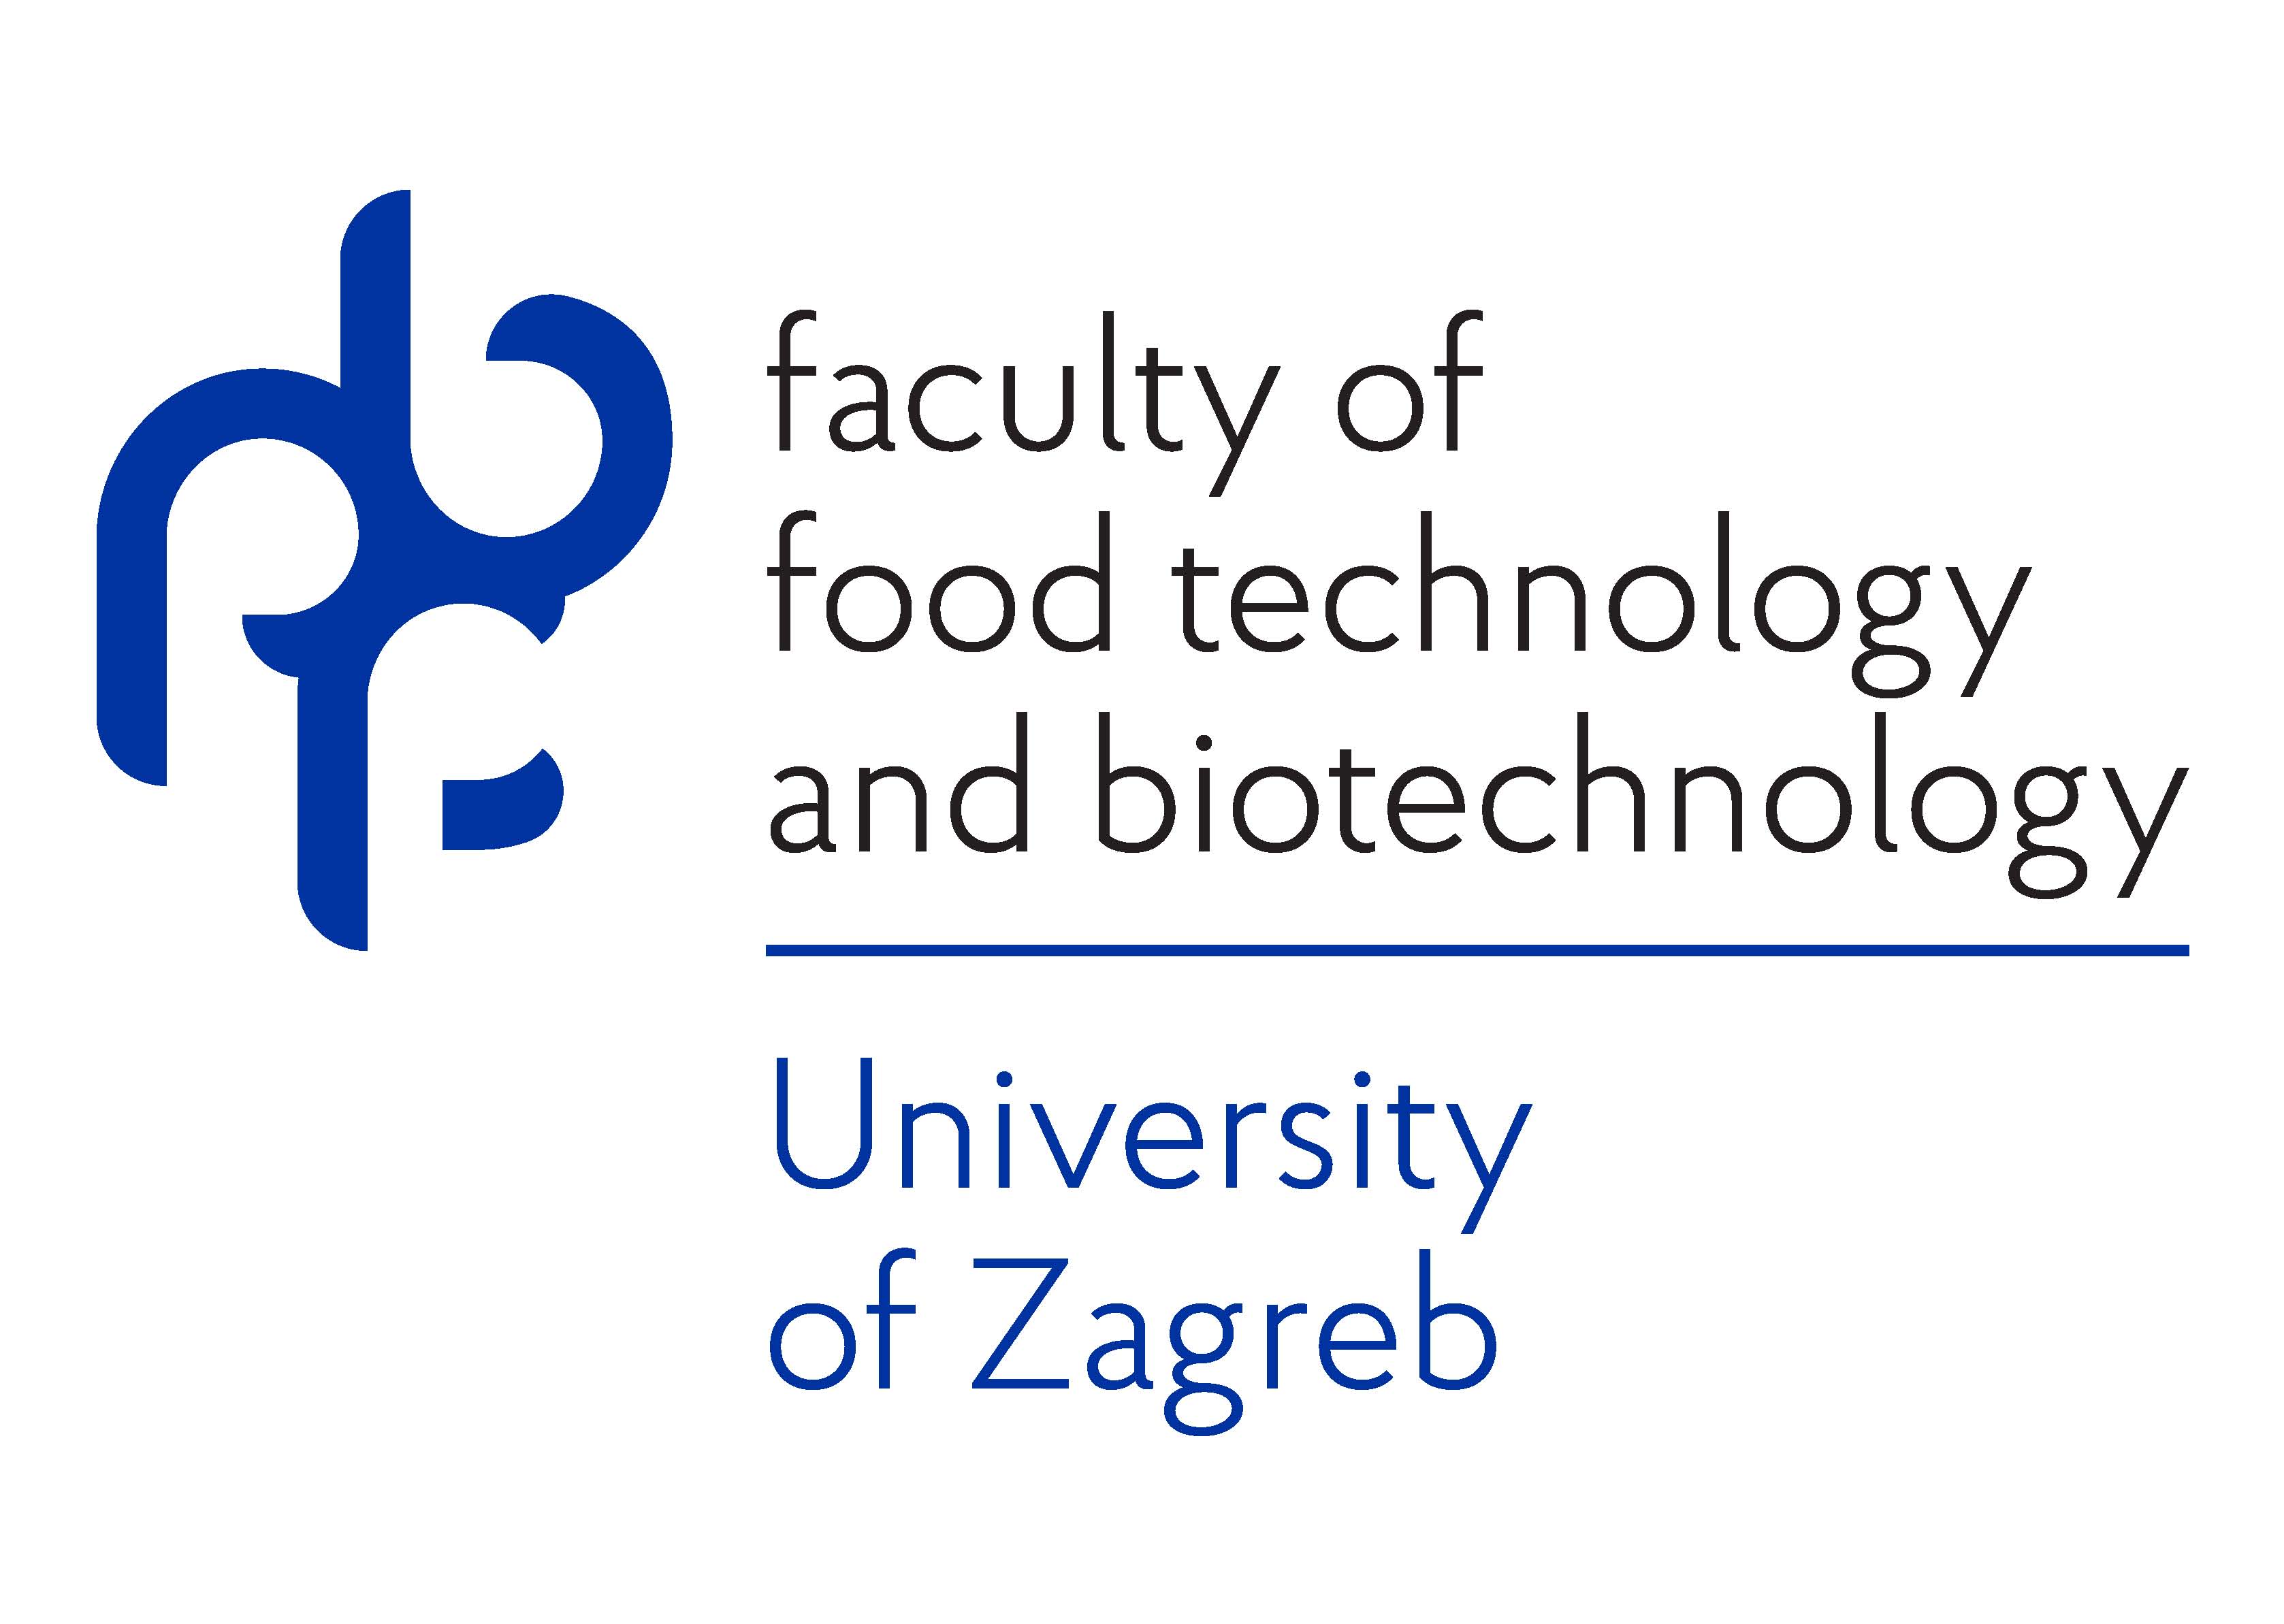 pbf logo en_university of zagreb_02